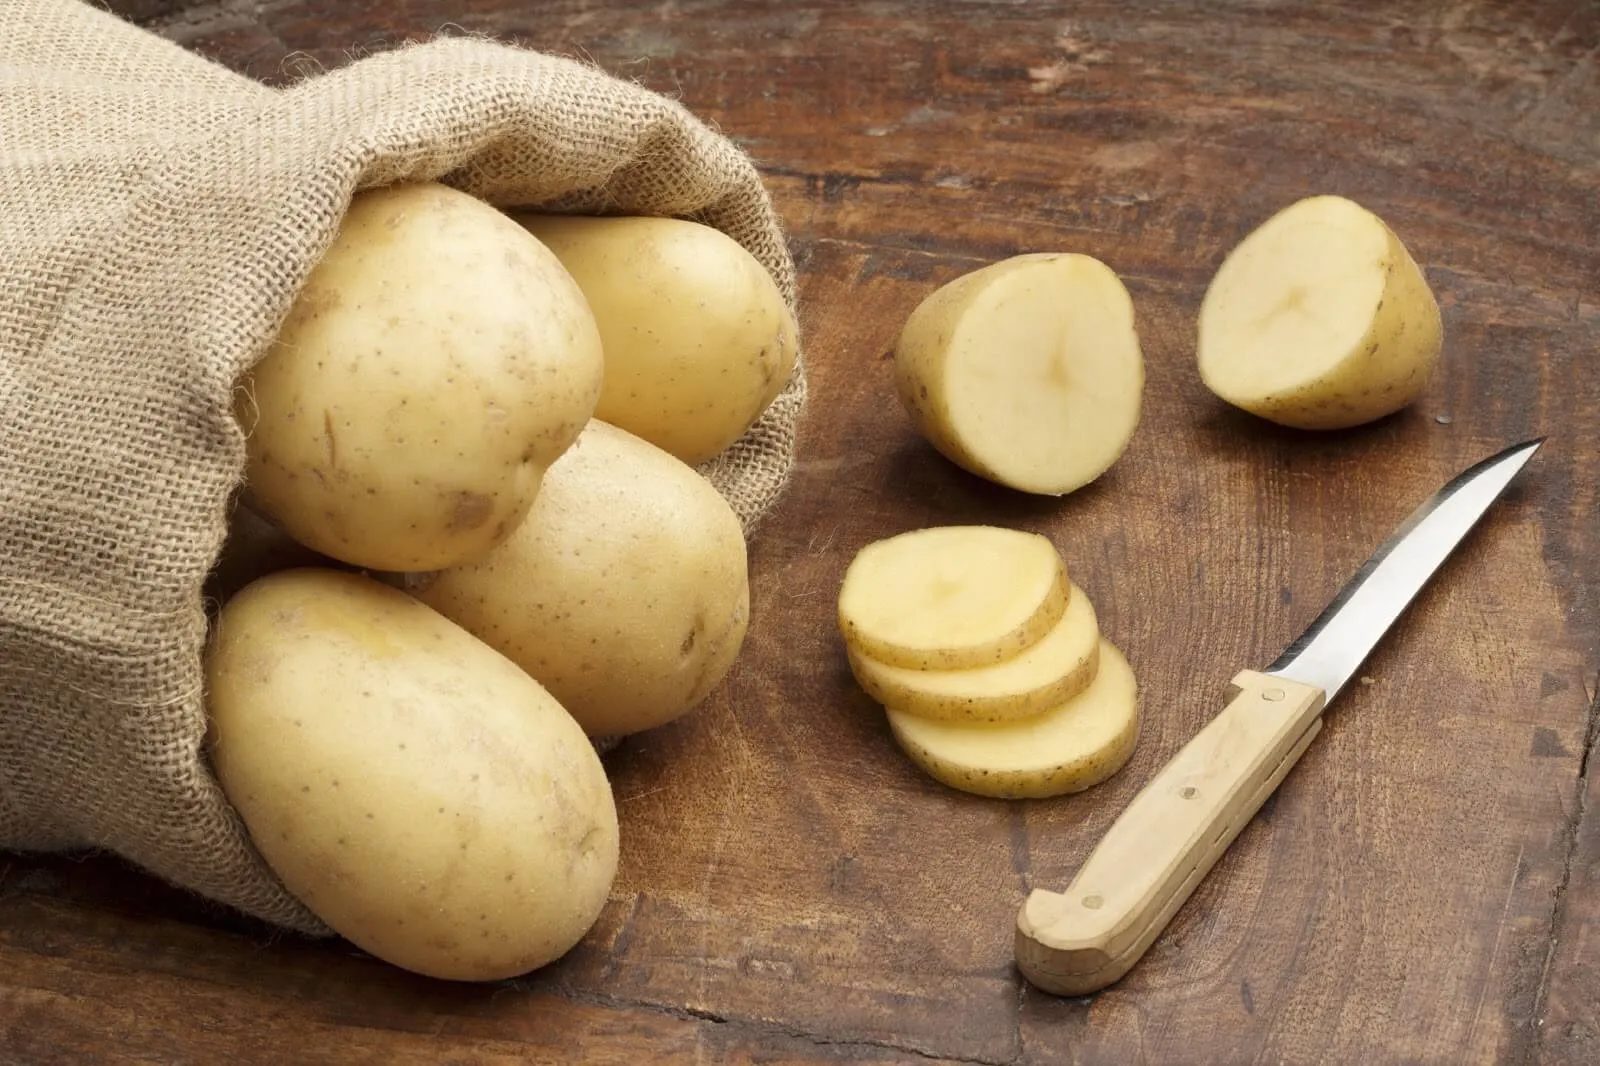 Sack of Potatoes